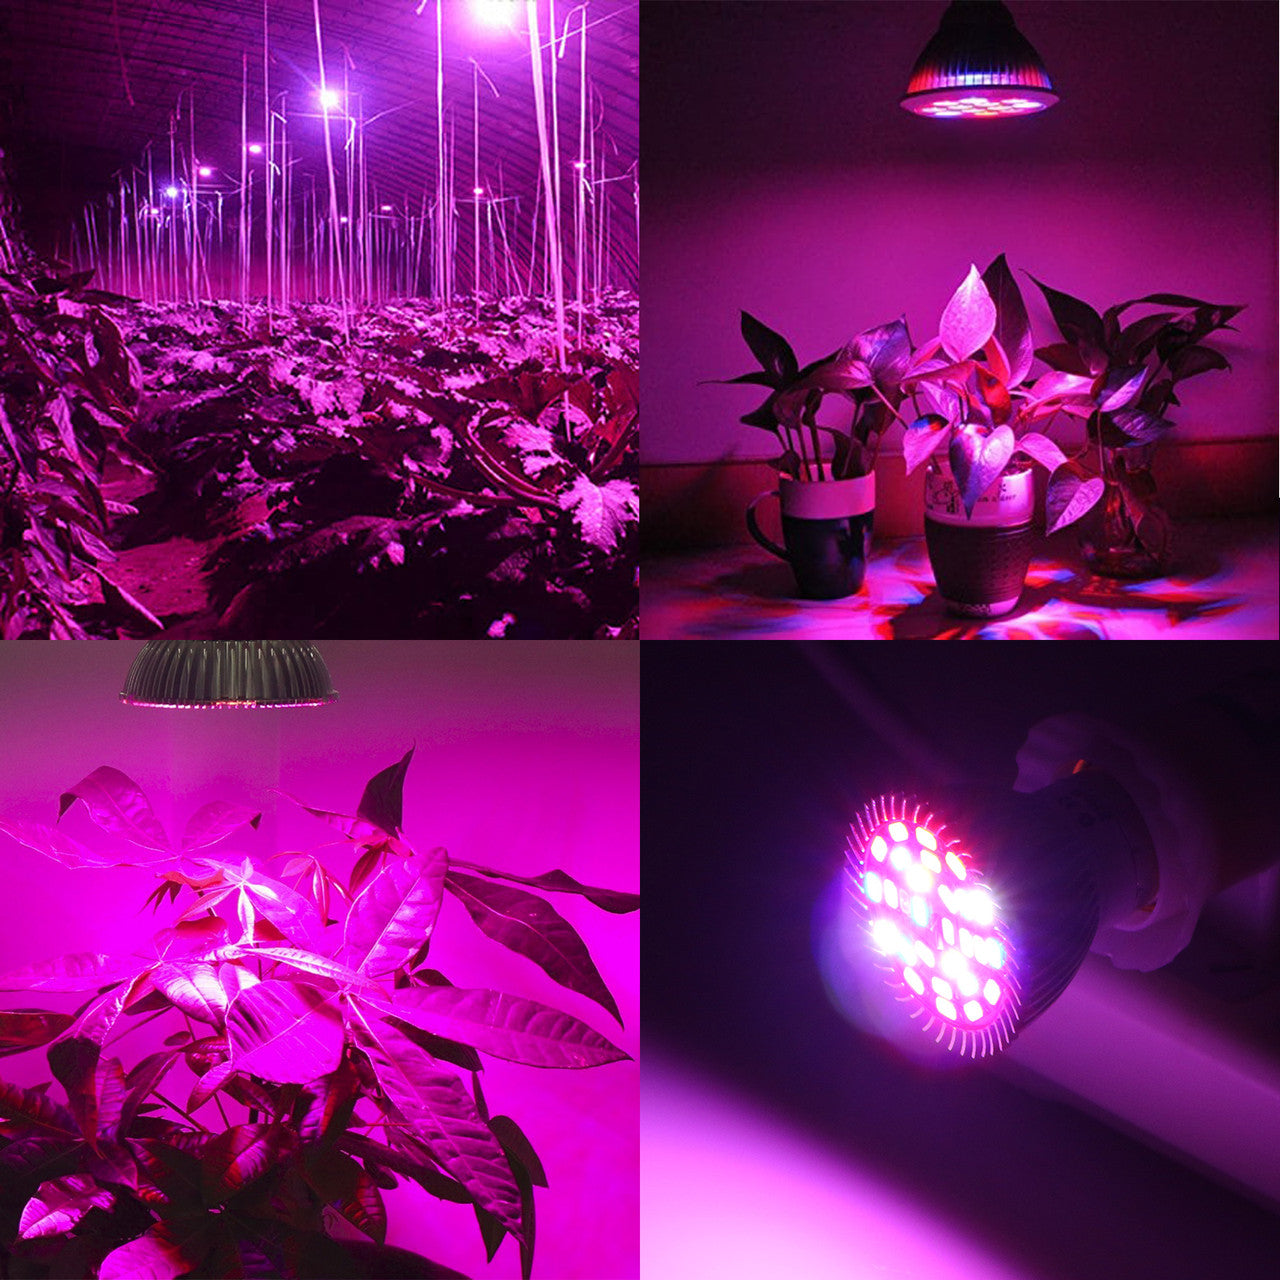 LED Grow Light, Full Spectrum E26 27 LEDs Grow Light Bulbs for Indoor Plants Greenhouse, 2Pcs